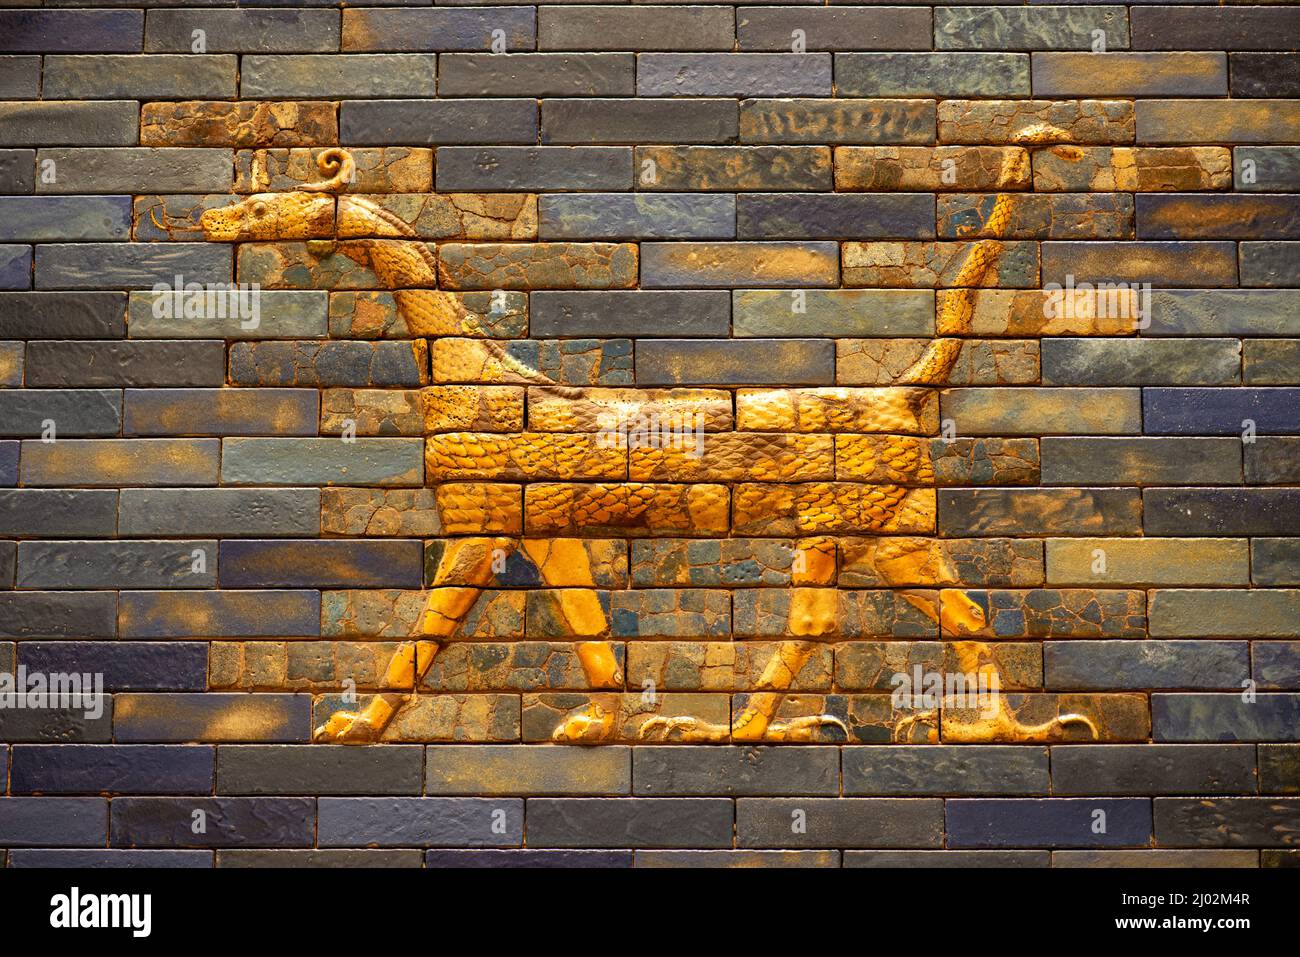 The Ishtar Gate (Arabic: بوابة عشتار) was the eighth gate to the inner city of Babylon Stock Photo